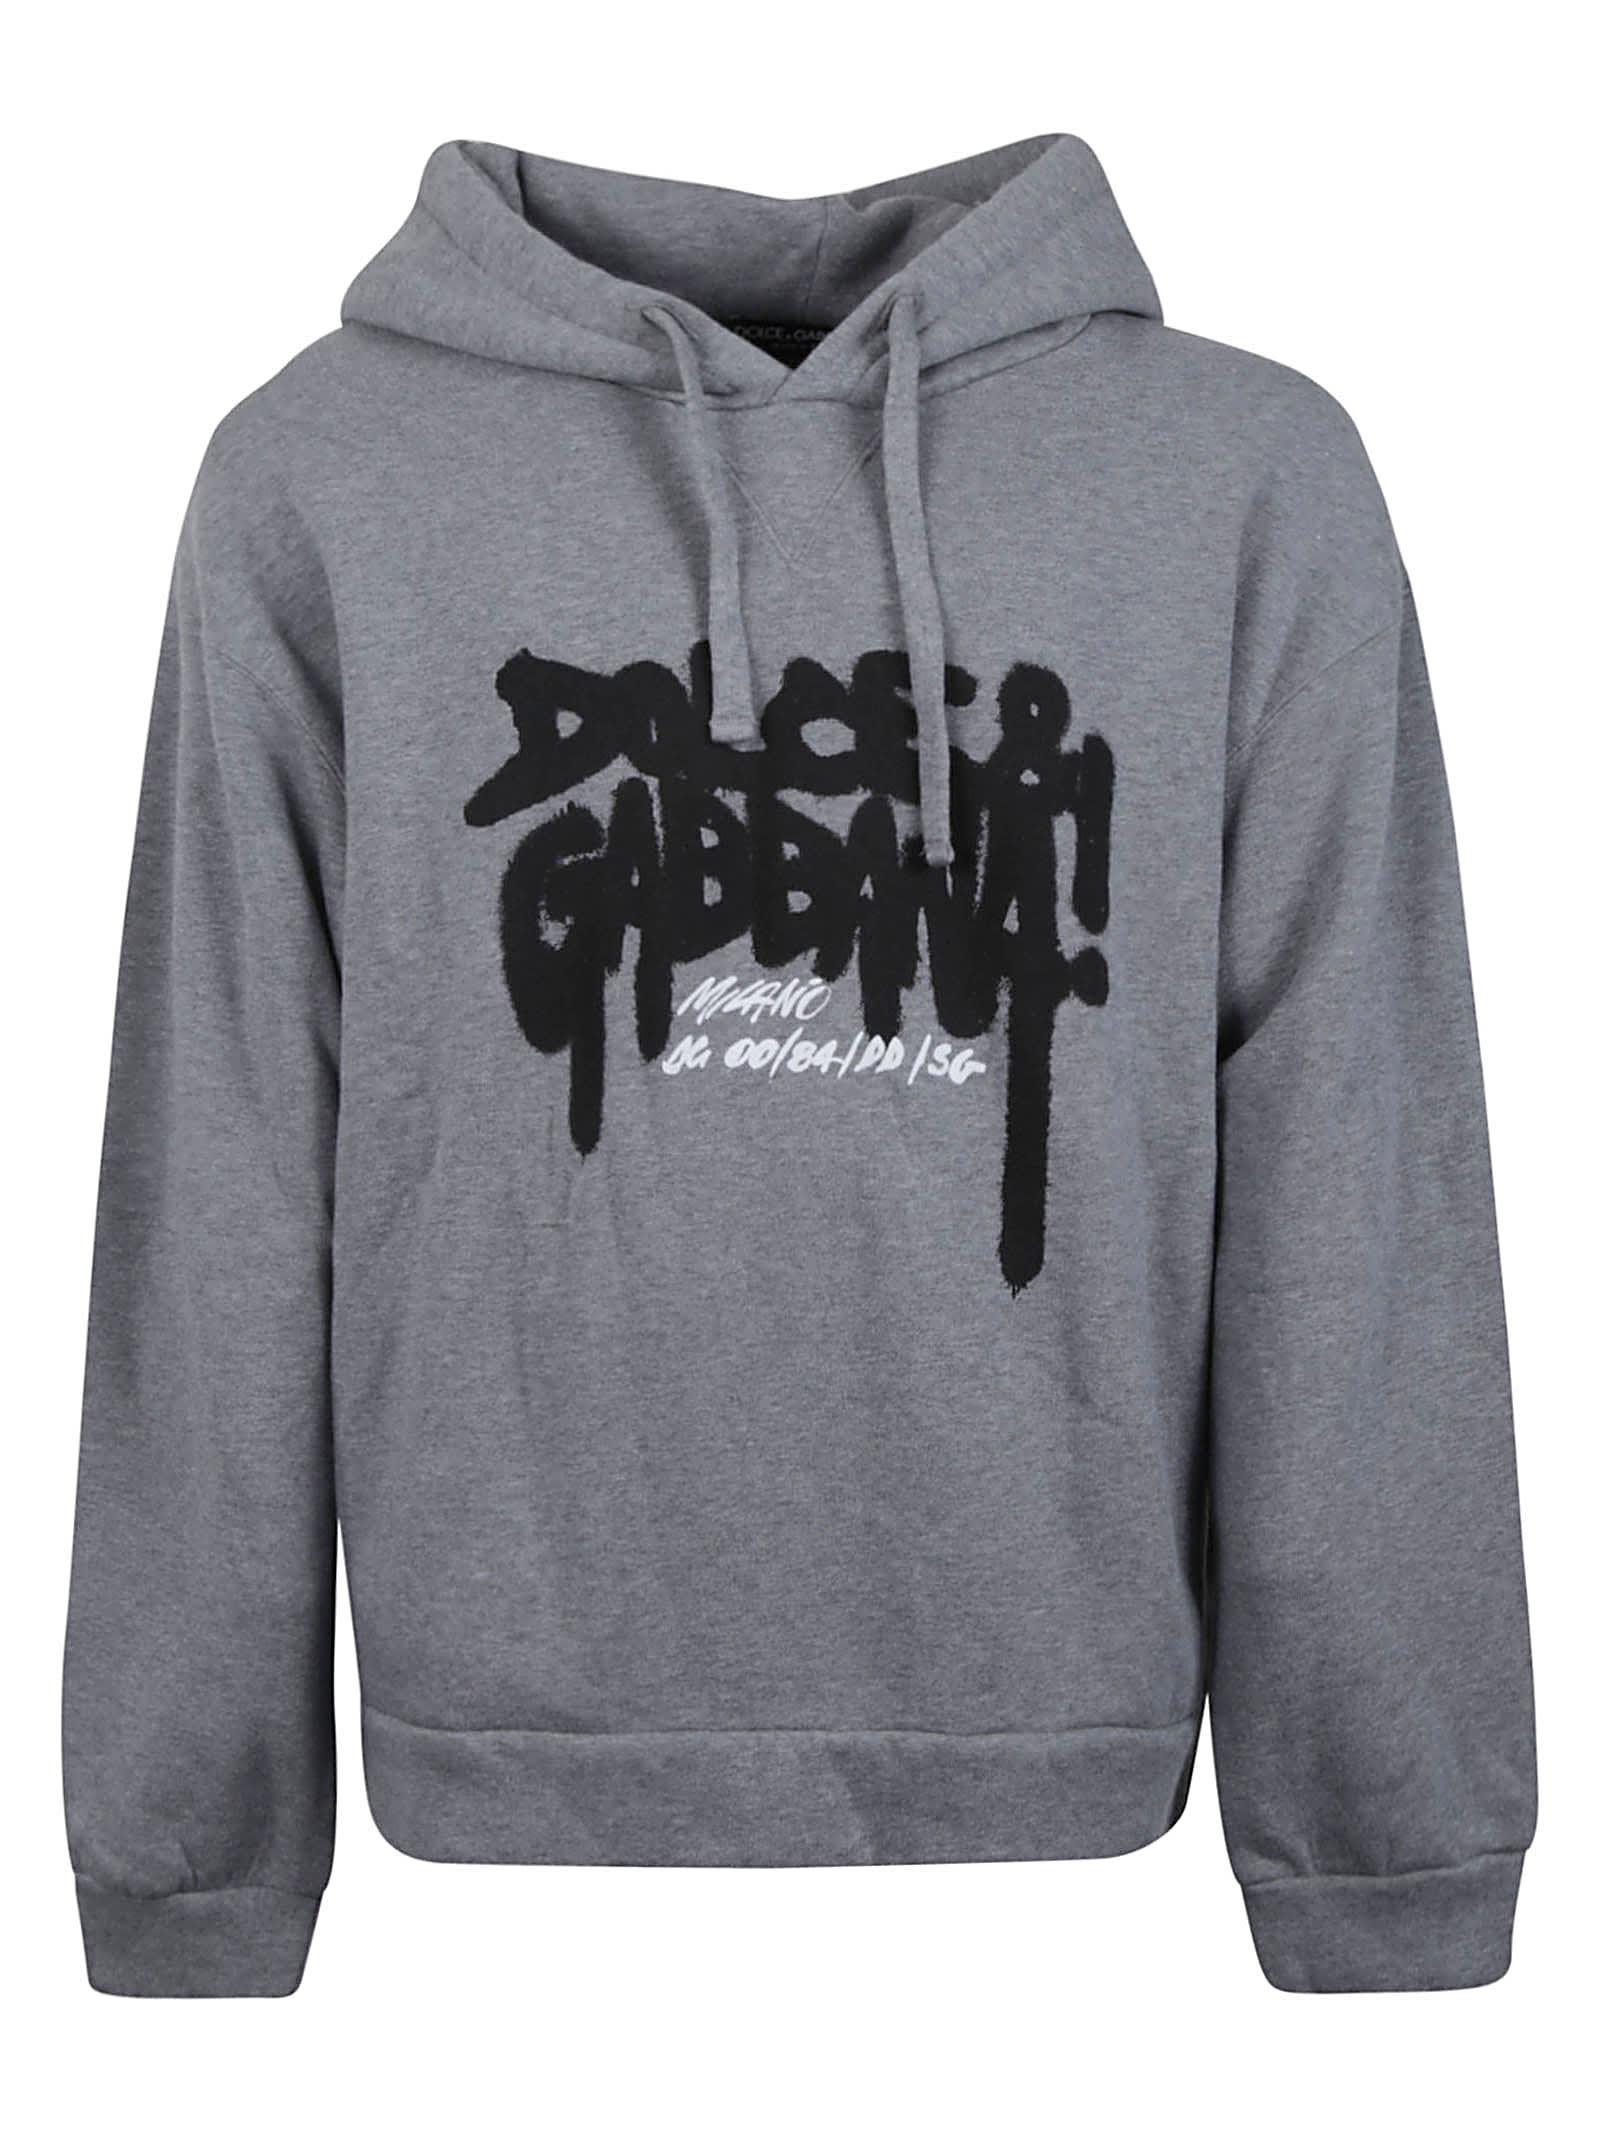 Dolce & Gabbana Graffiti Logo Hooded Sweatshirt